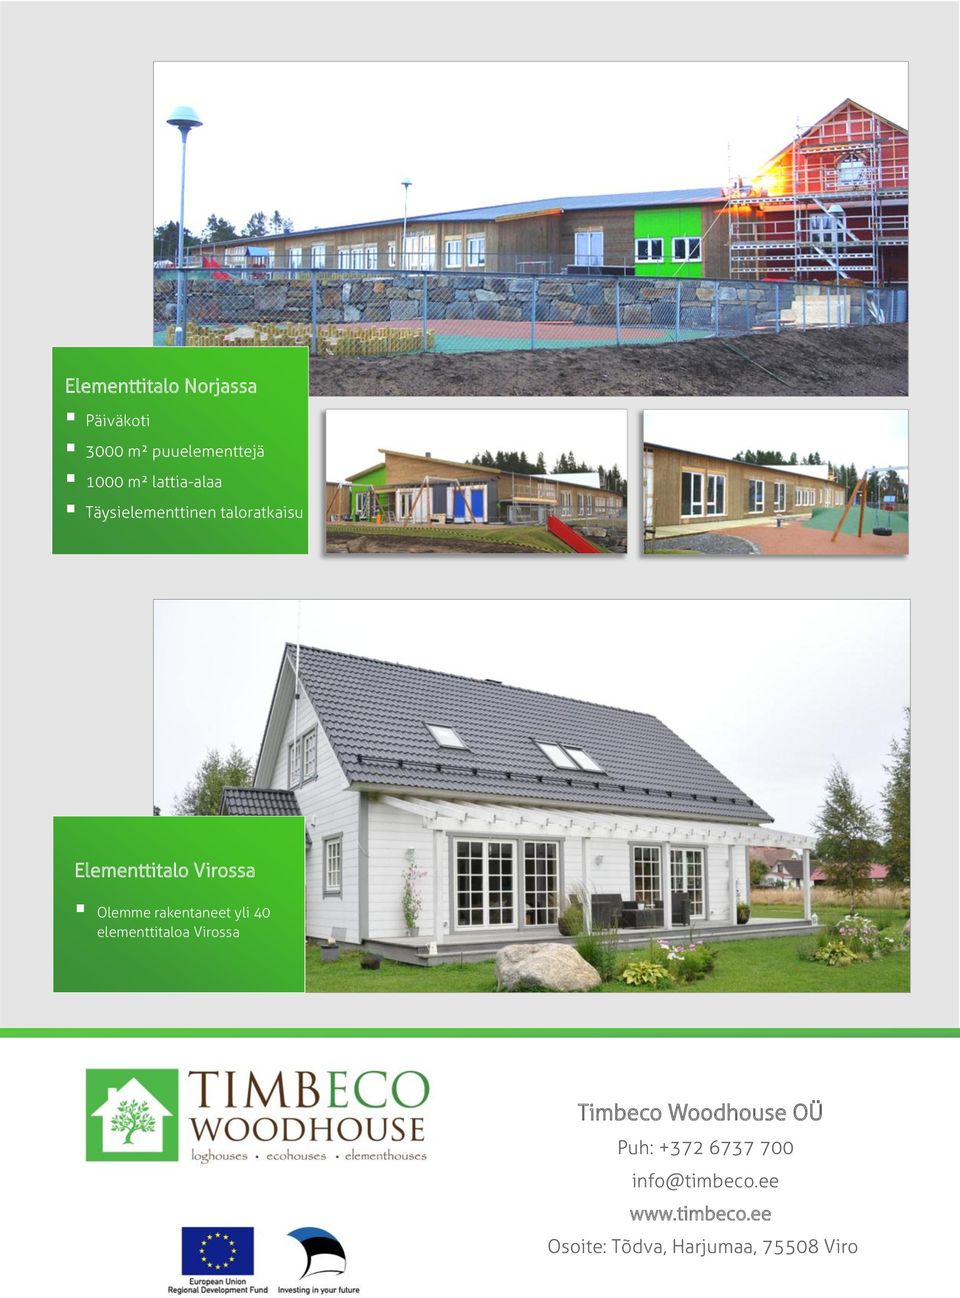 Olemme rakentaneet yli 40 elementtitaloa Virossa Timbeco Woodhouse OÜ